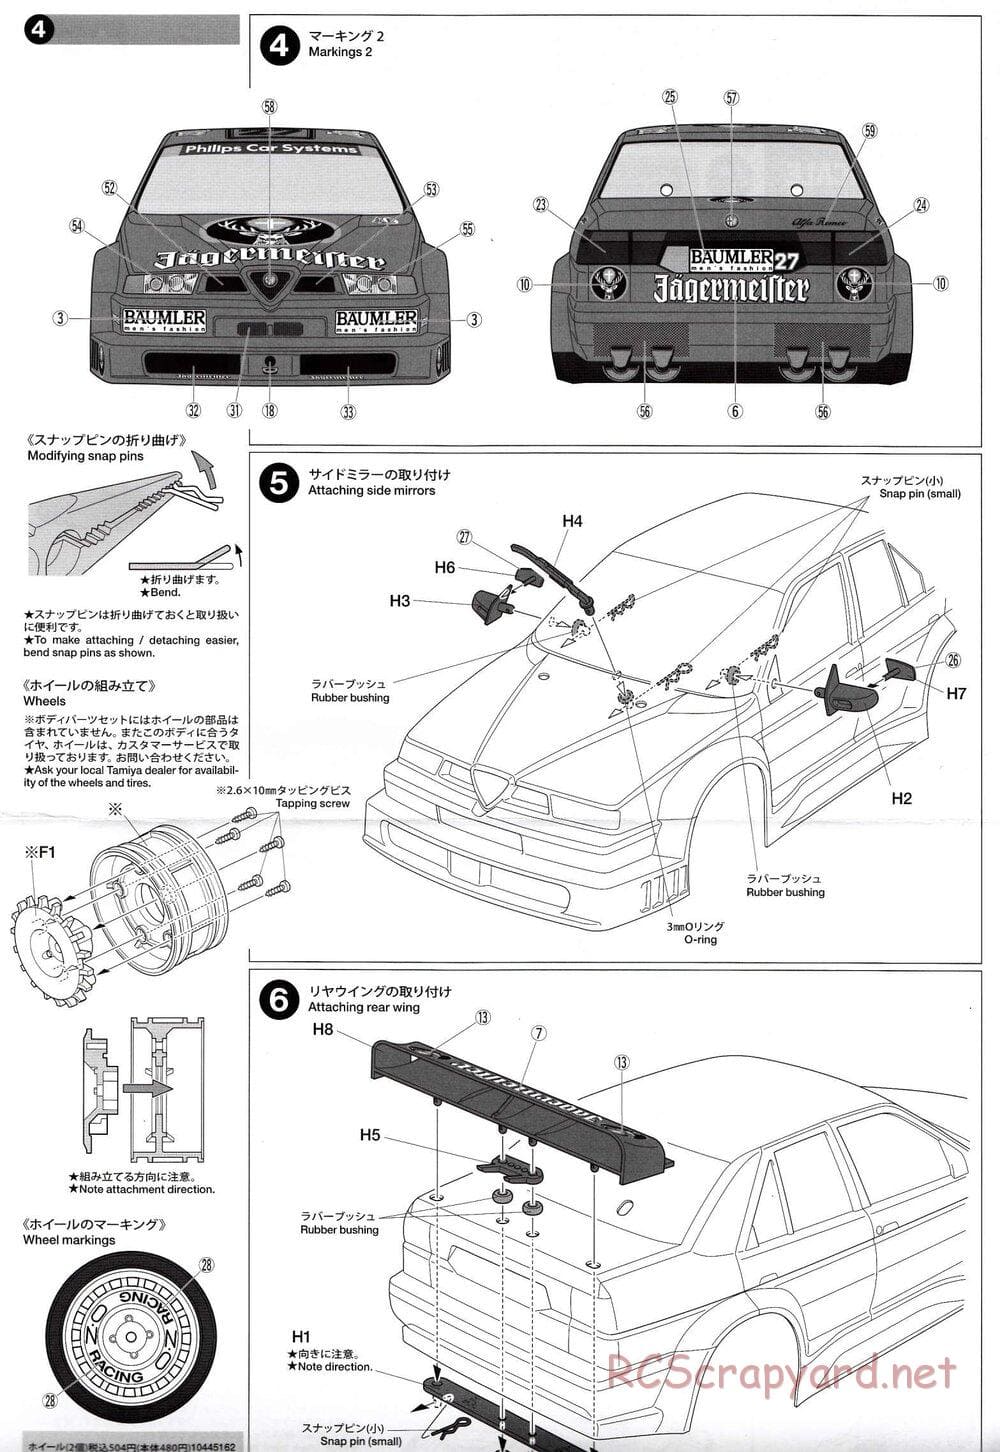 Tamiya - Alfa Romeo 155 V6 TI Jgermeister - TT-02 Chassis - Body Manual - Page 3